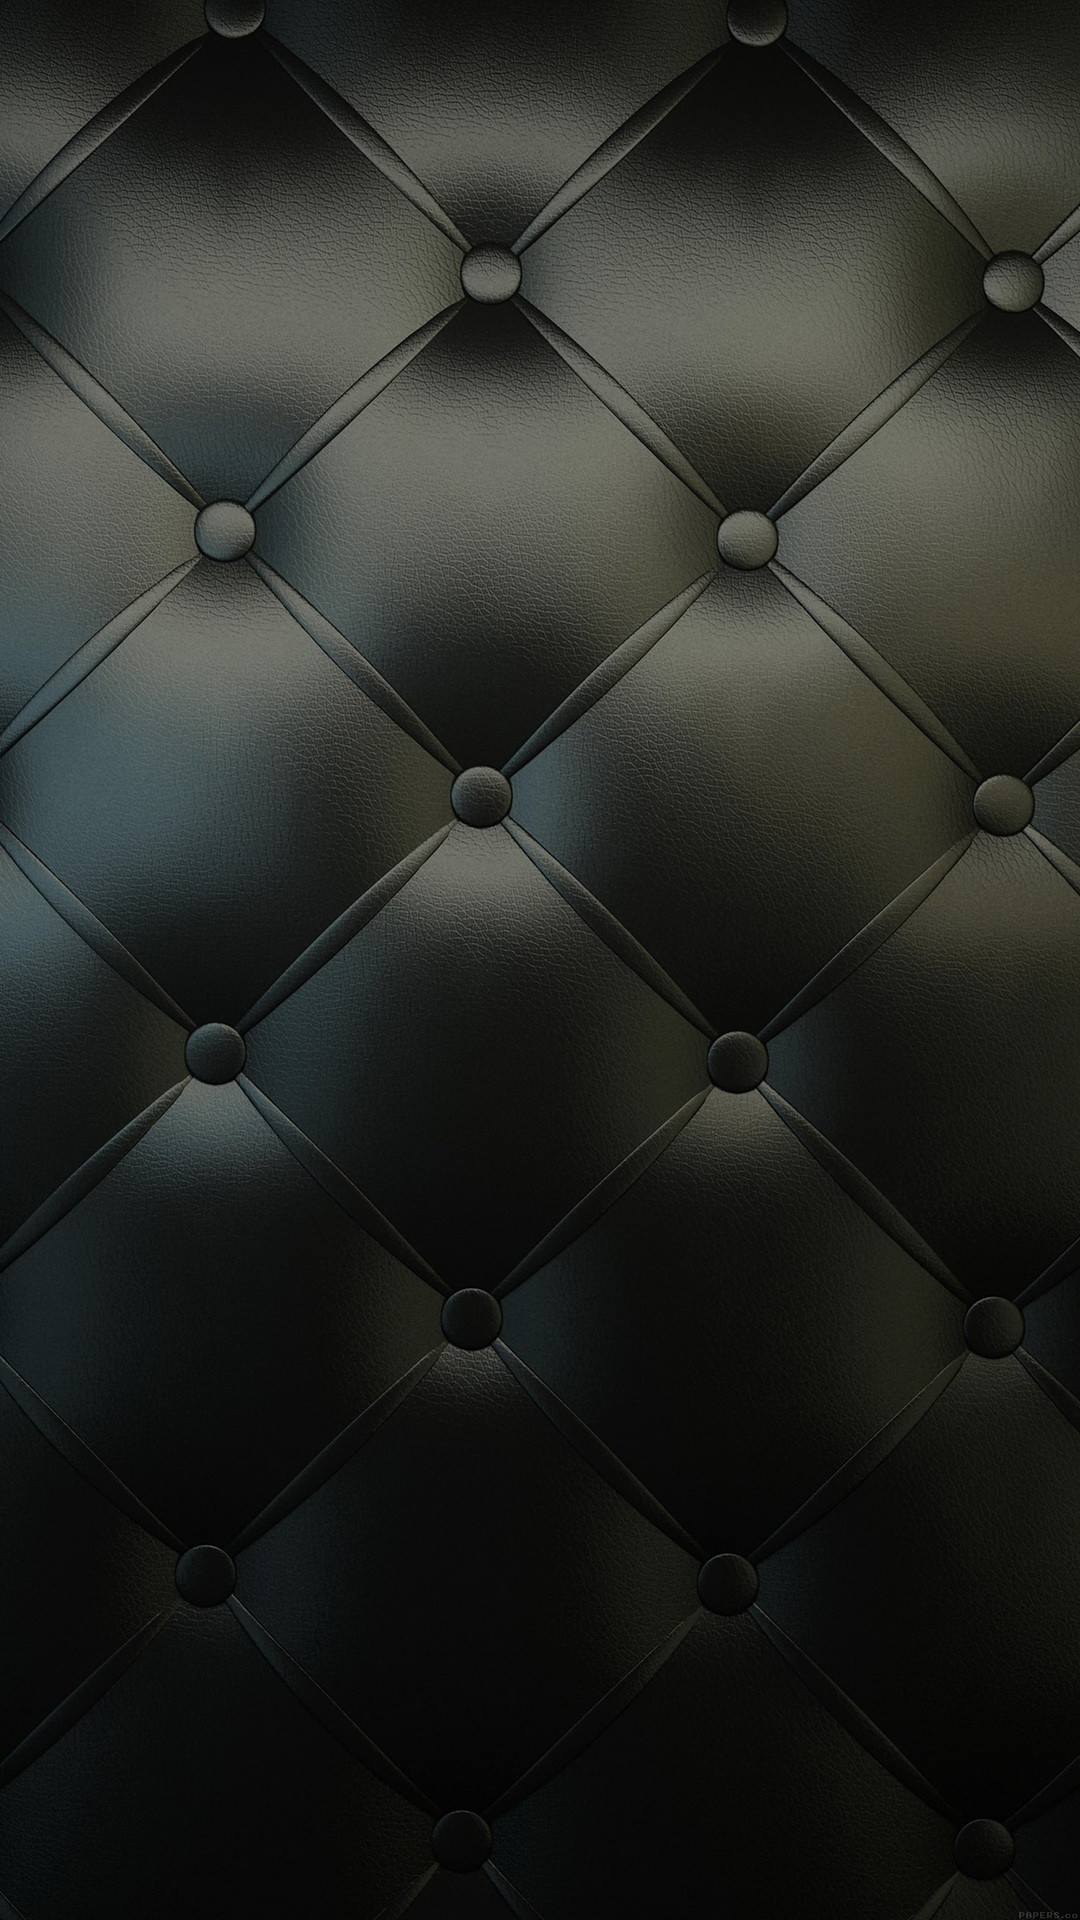 1080x1920 Dark Chesterfield Sofa Pattern iPhone 6 Plus HD Wallpaper